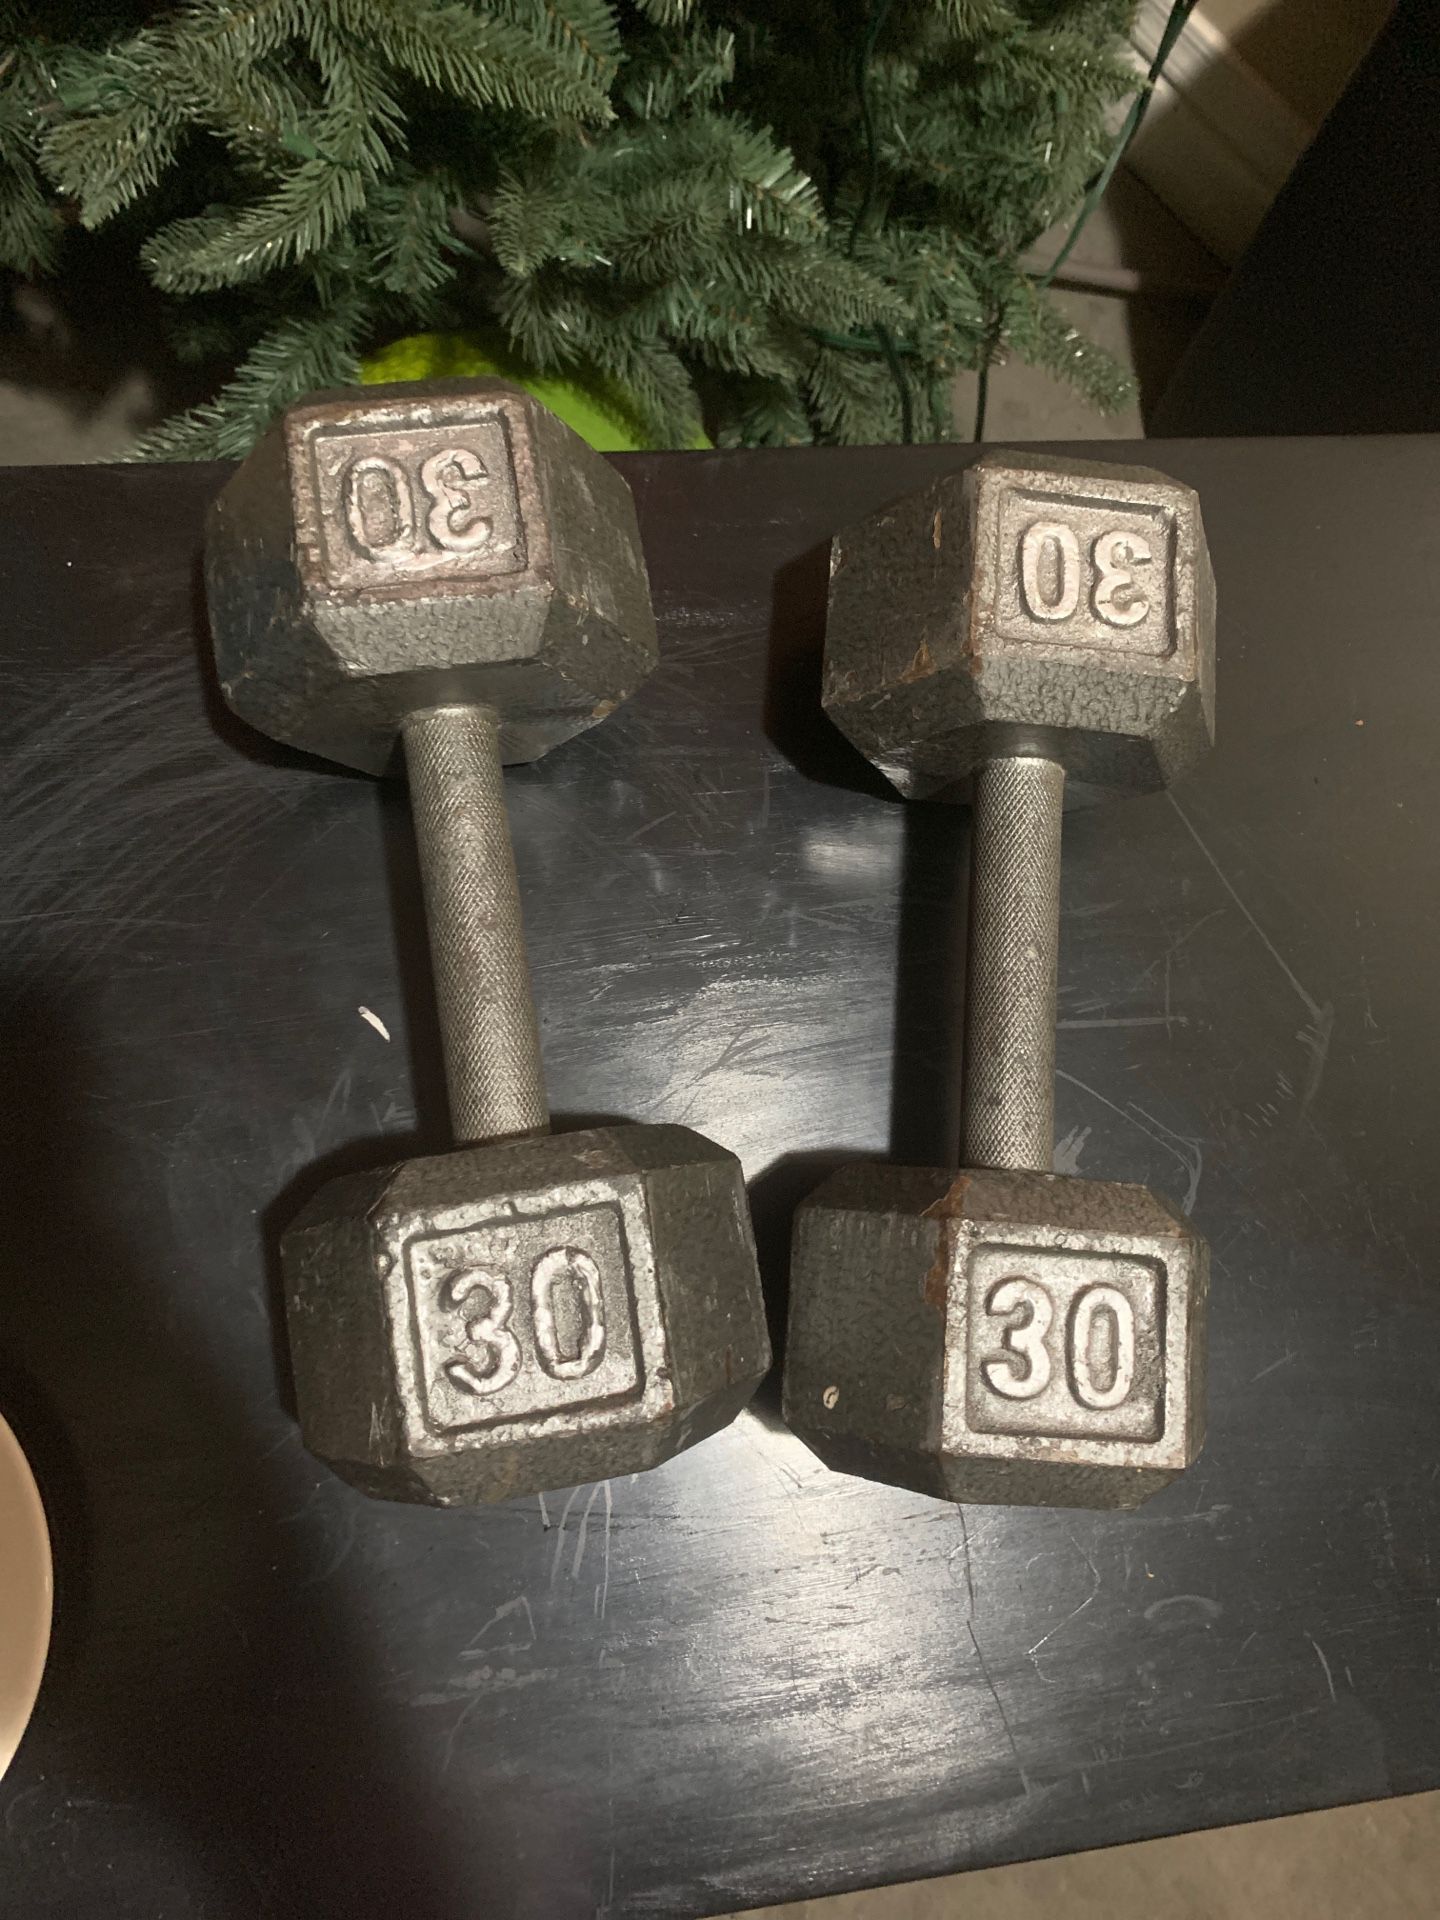 Set of 2 30 lb dumbbells